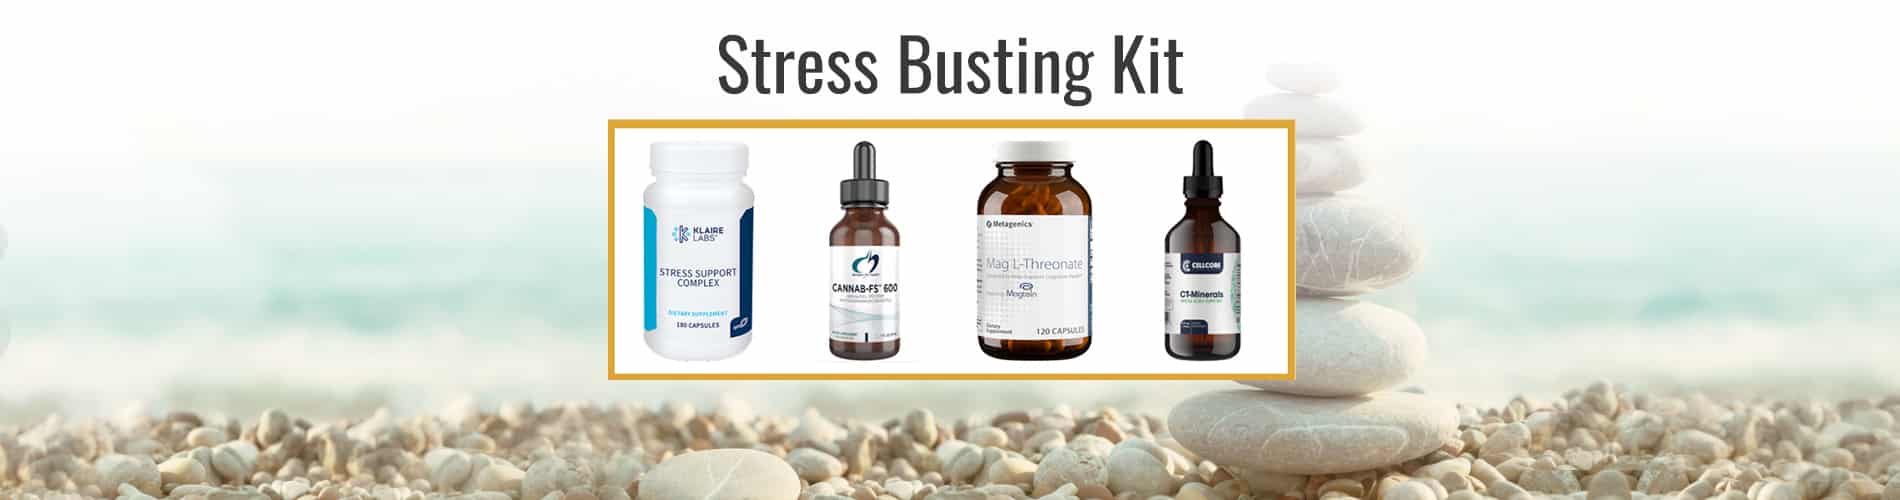 Stress Busting Kit